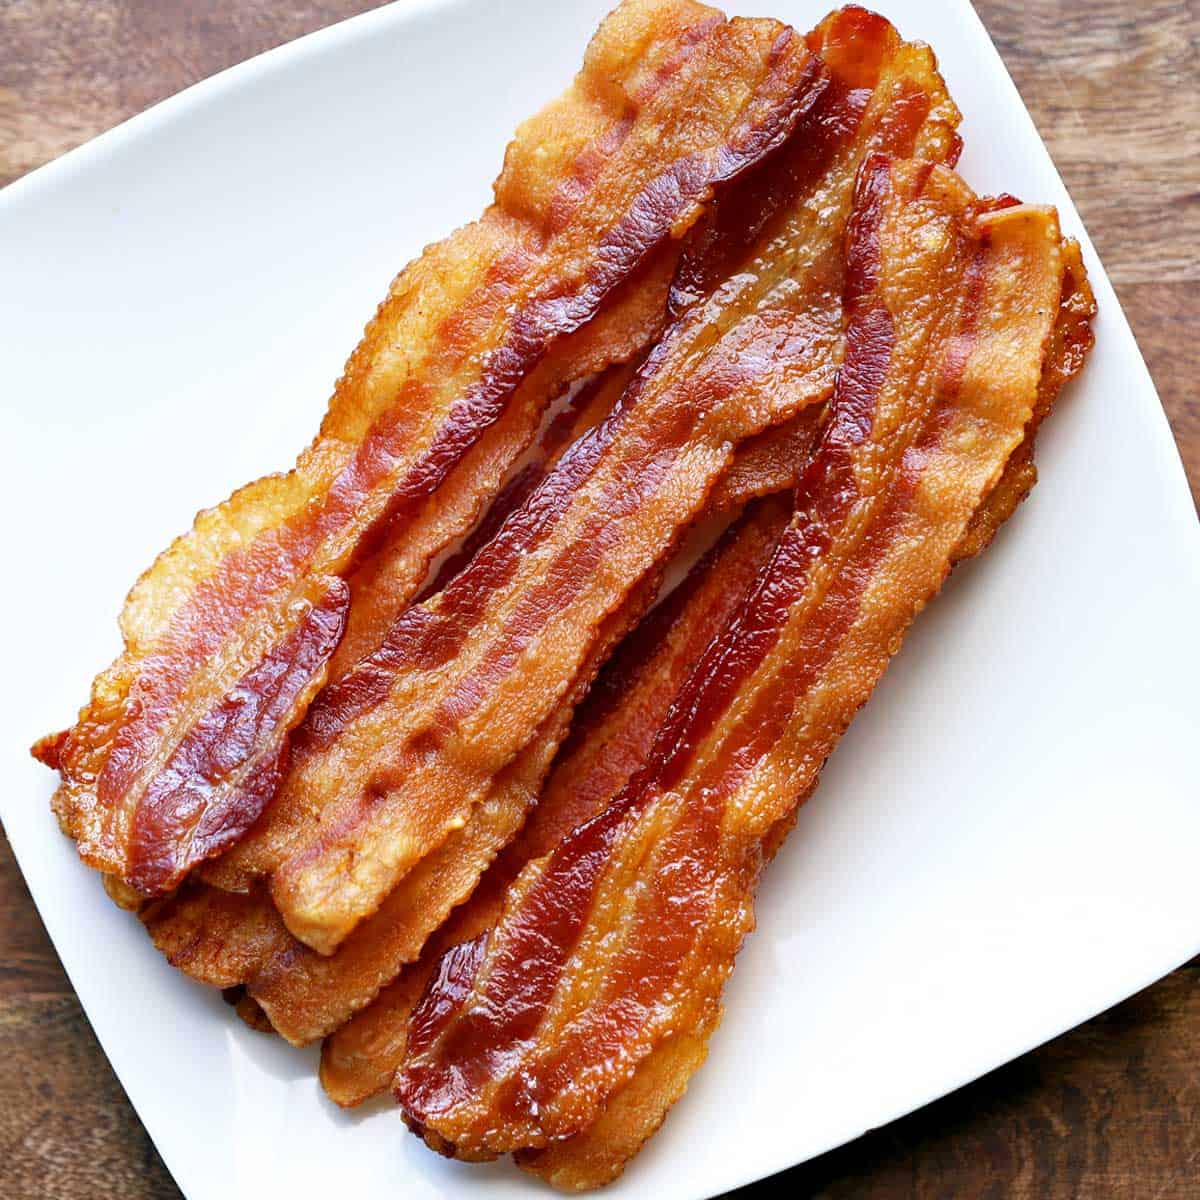 https://healthyrecipesblogs.com/wp-content/uploads/2018/01/oven-bacon-featured.jpg